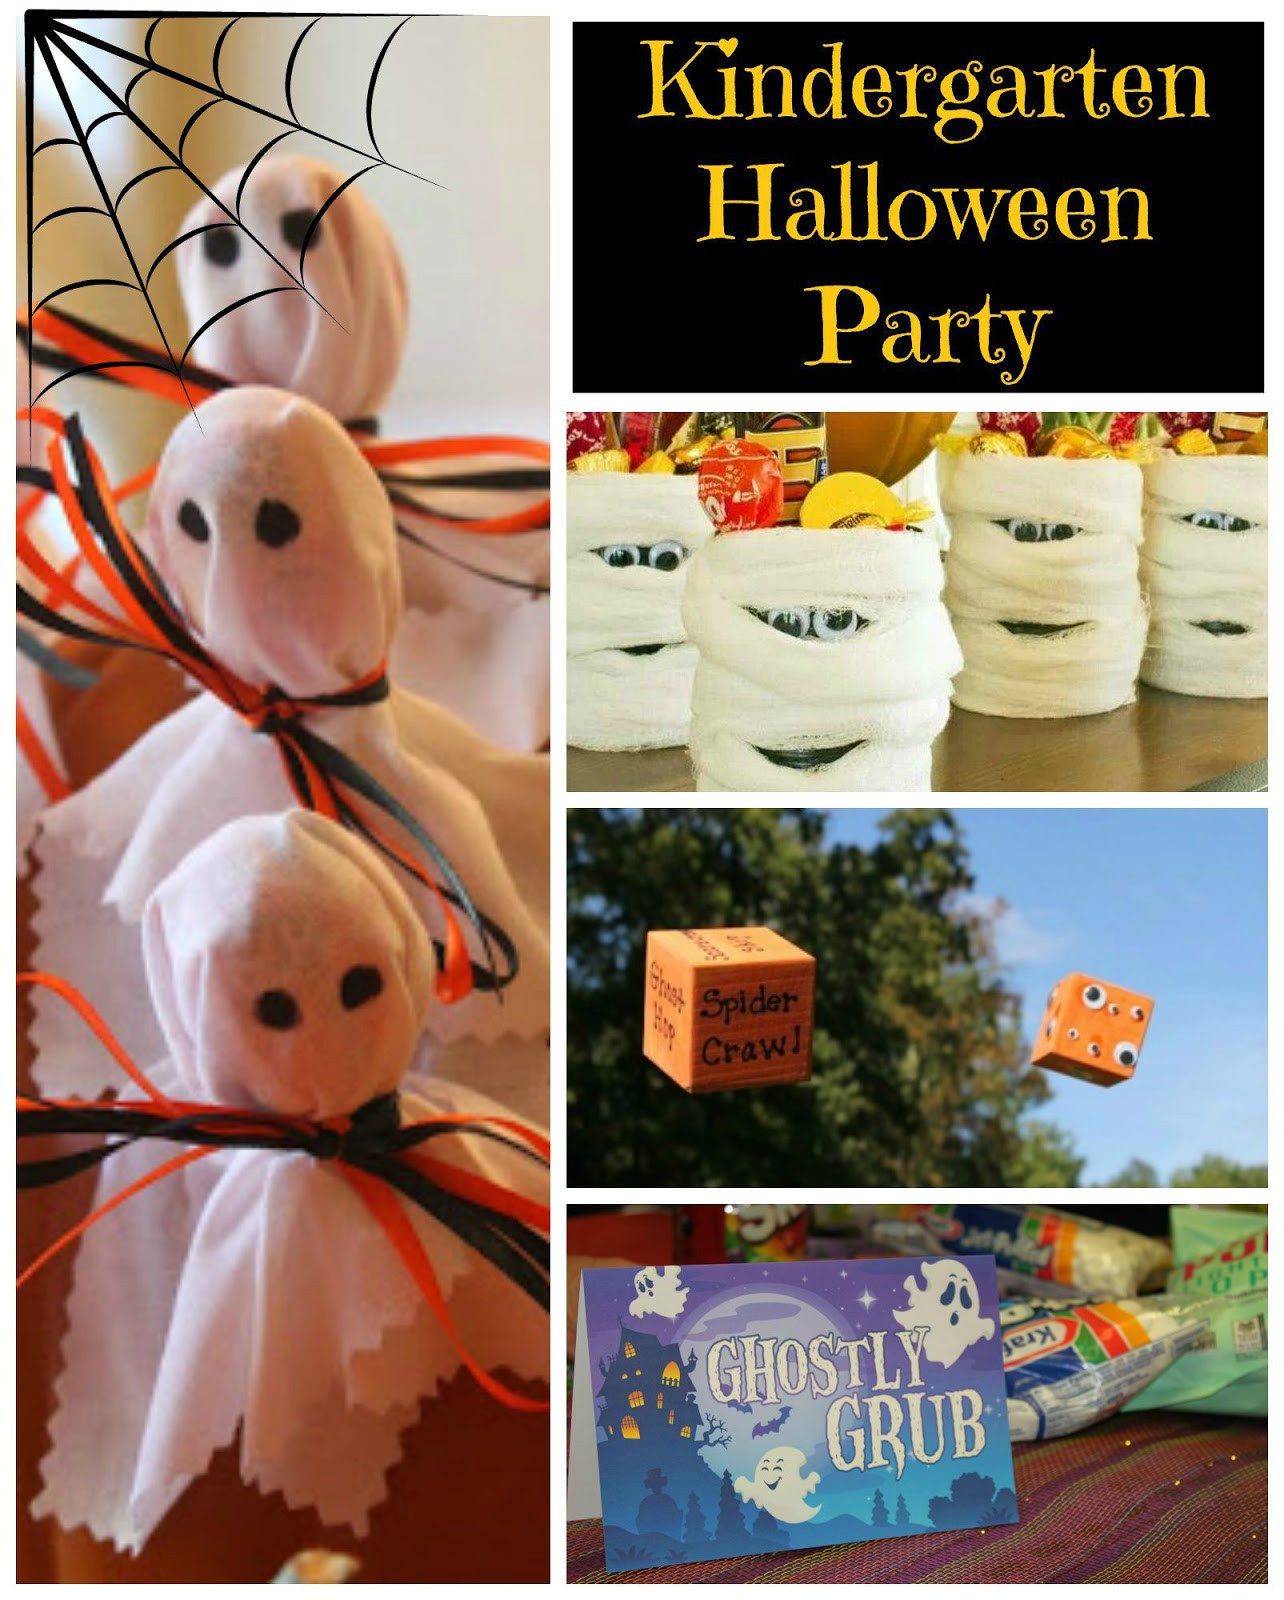 Halloween Class Party Ideas Kindergarten
 Keeping up with the Kiddos Kindergarten Halloween Party